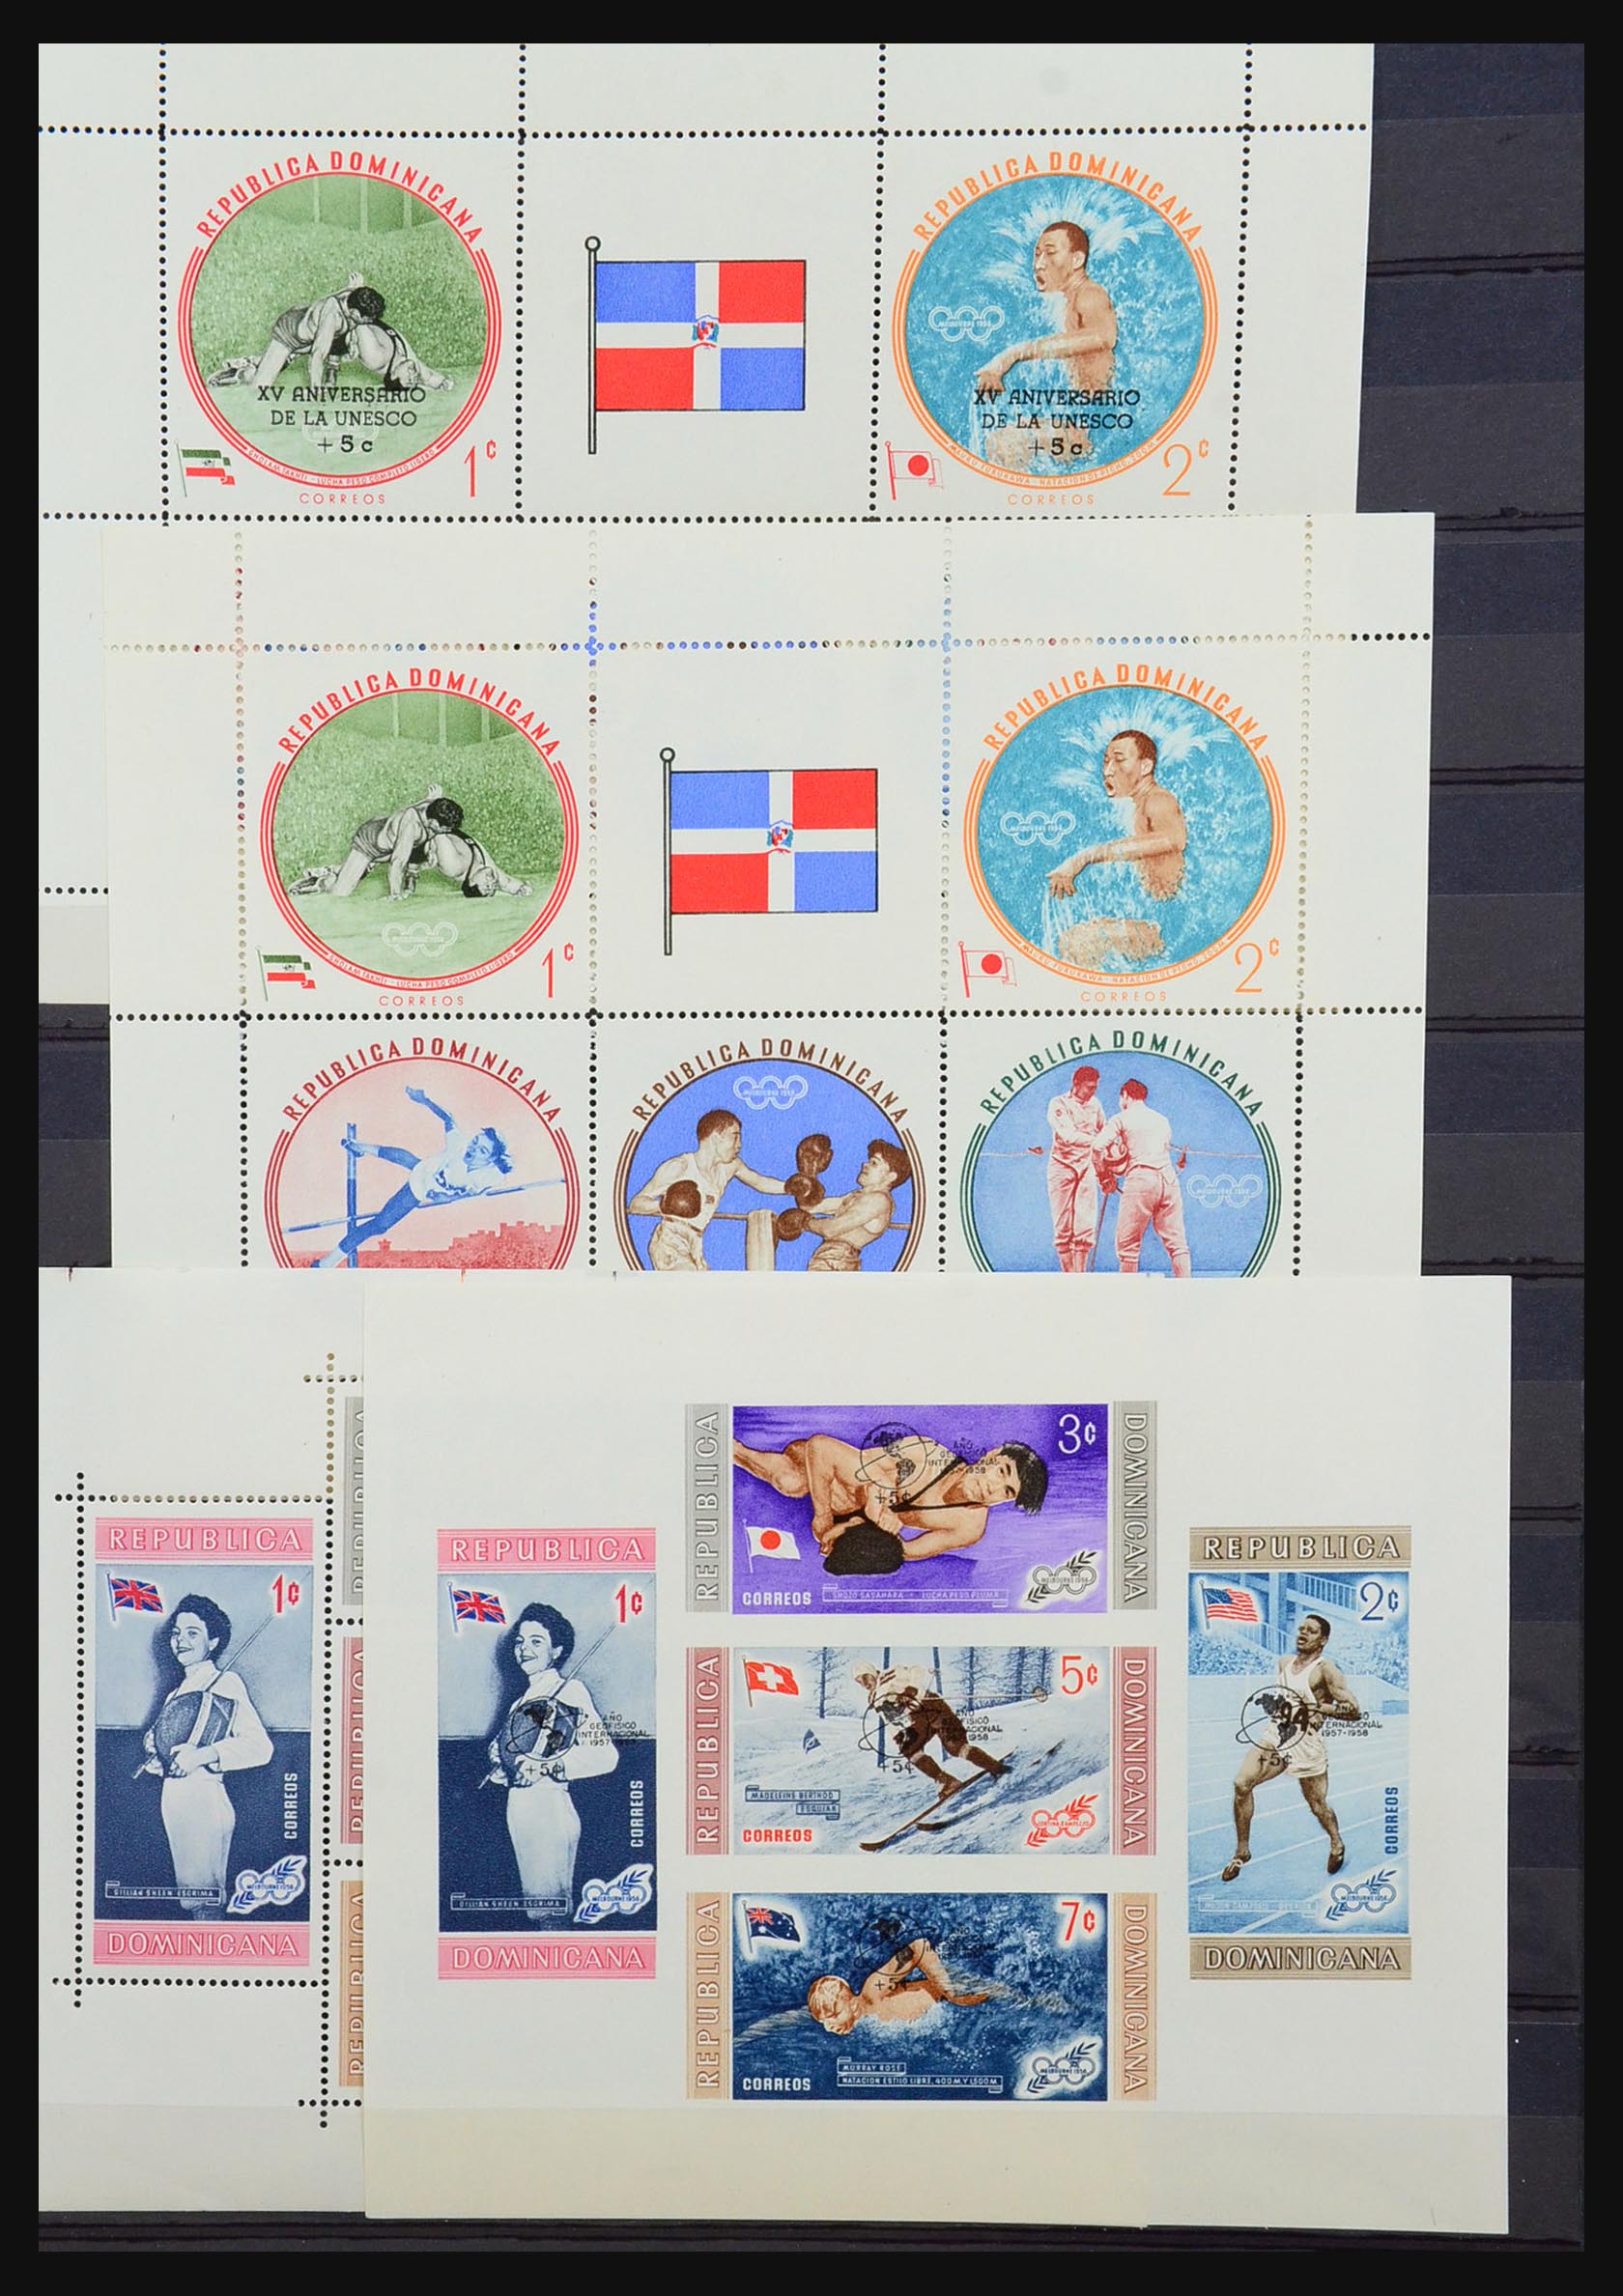 31524 005 - 31524 World souvenir sheets 1937-1985.